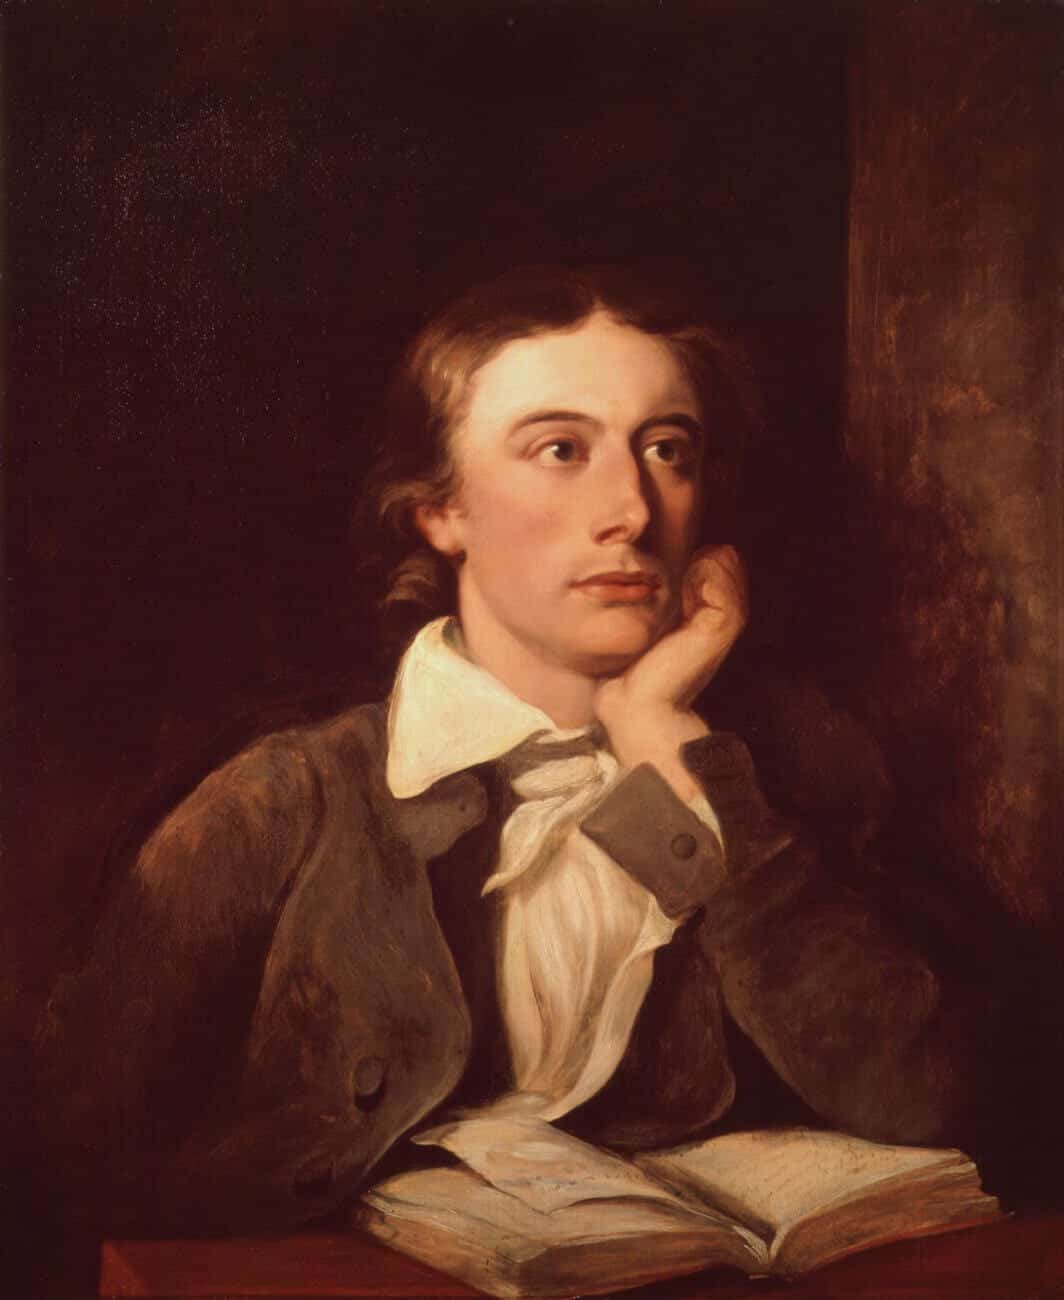 John Keats Biography and Summary Poem Analysis